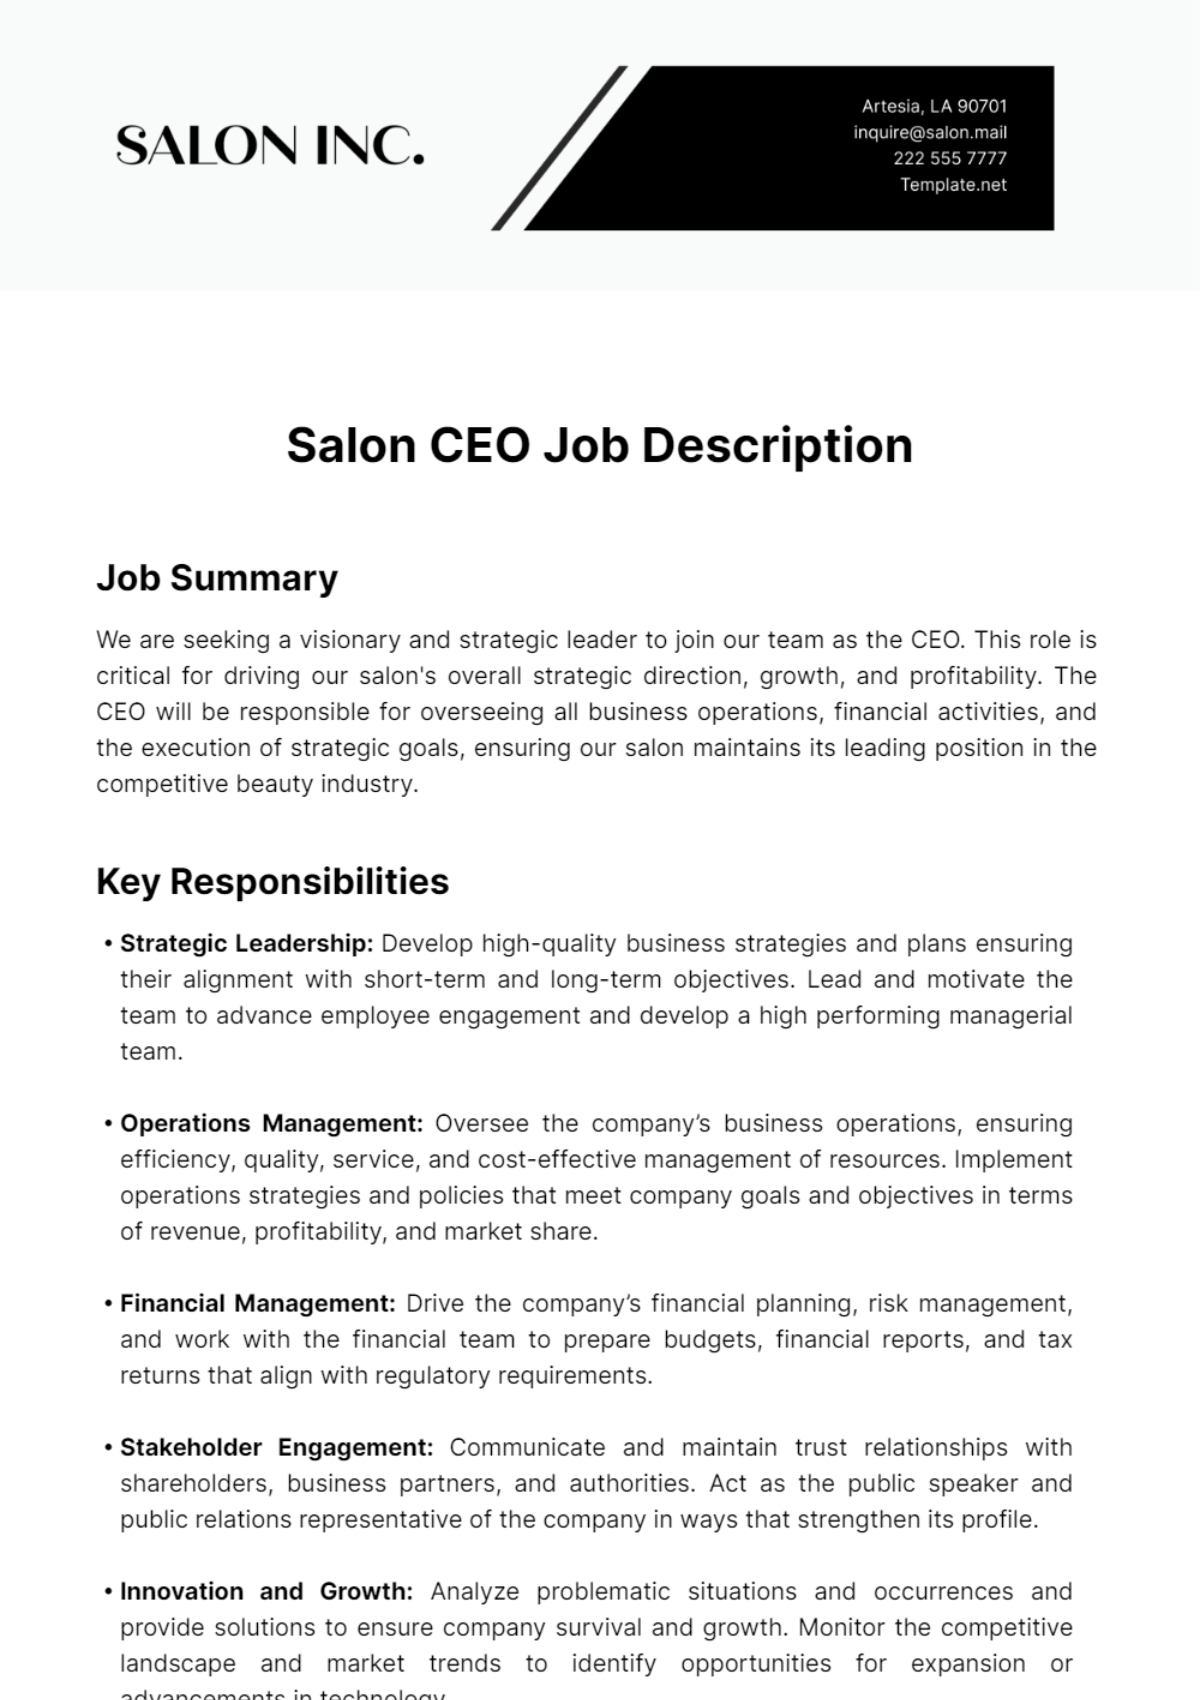 Salon CEO Job Description Template